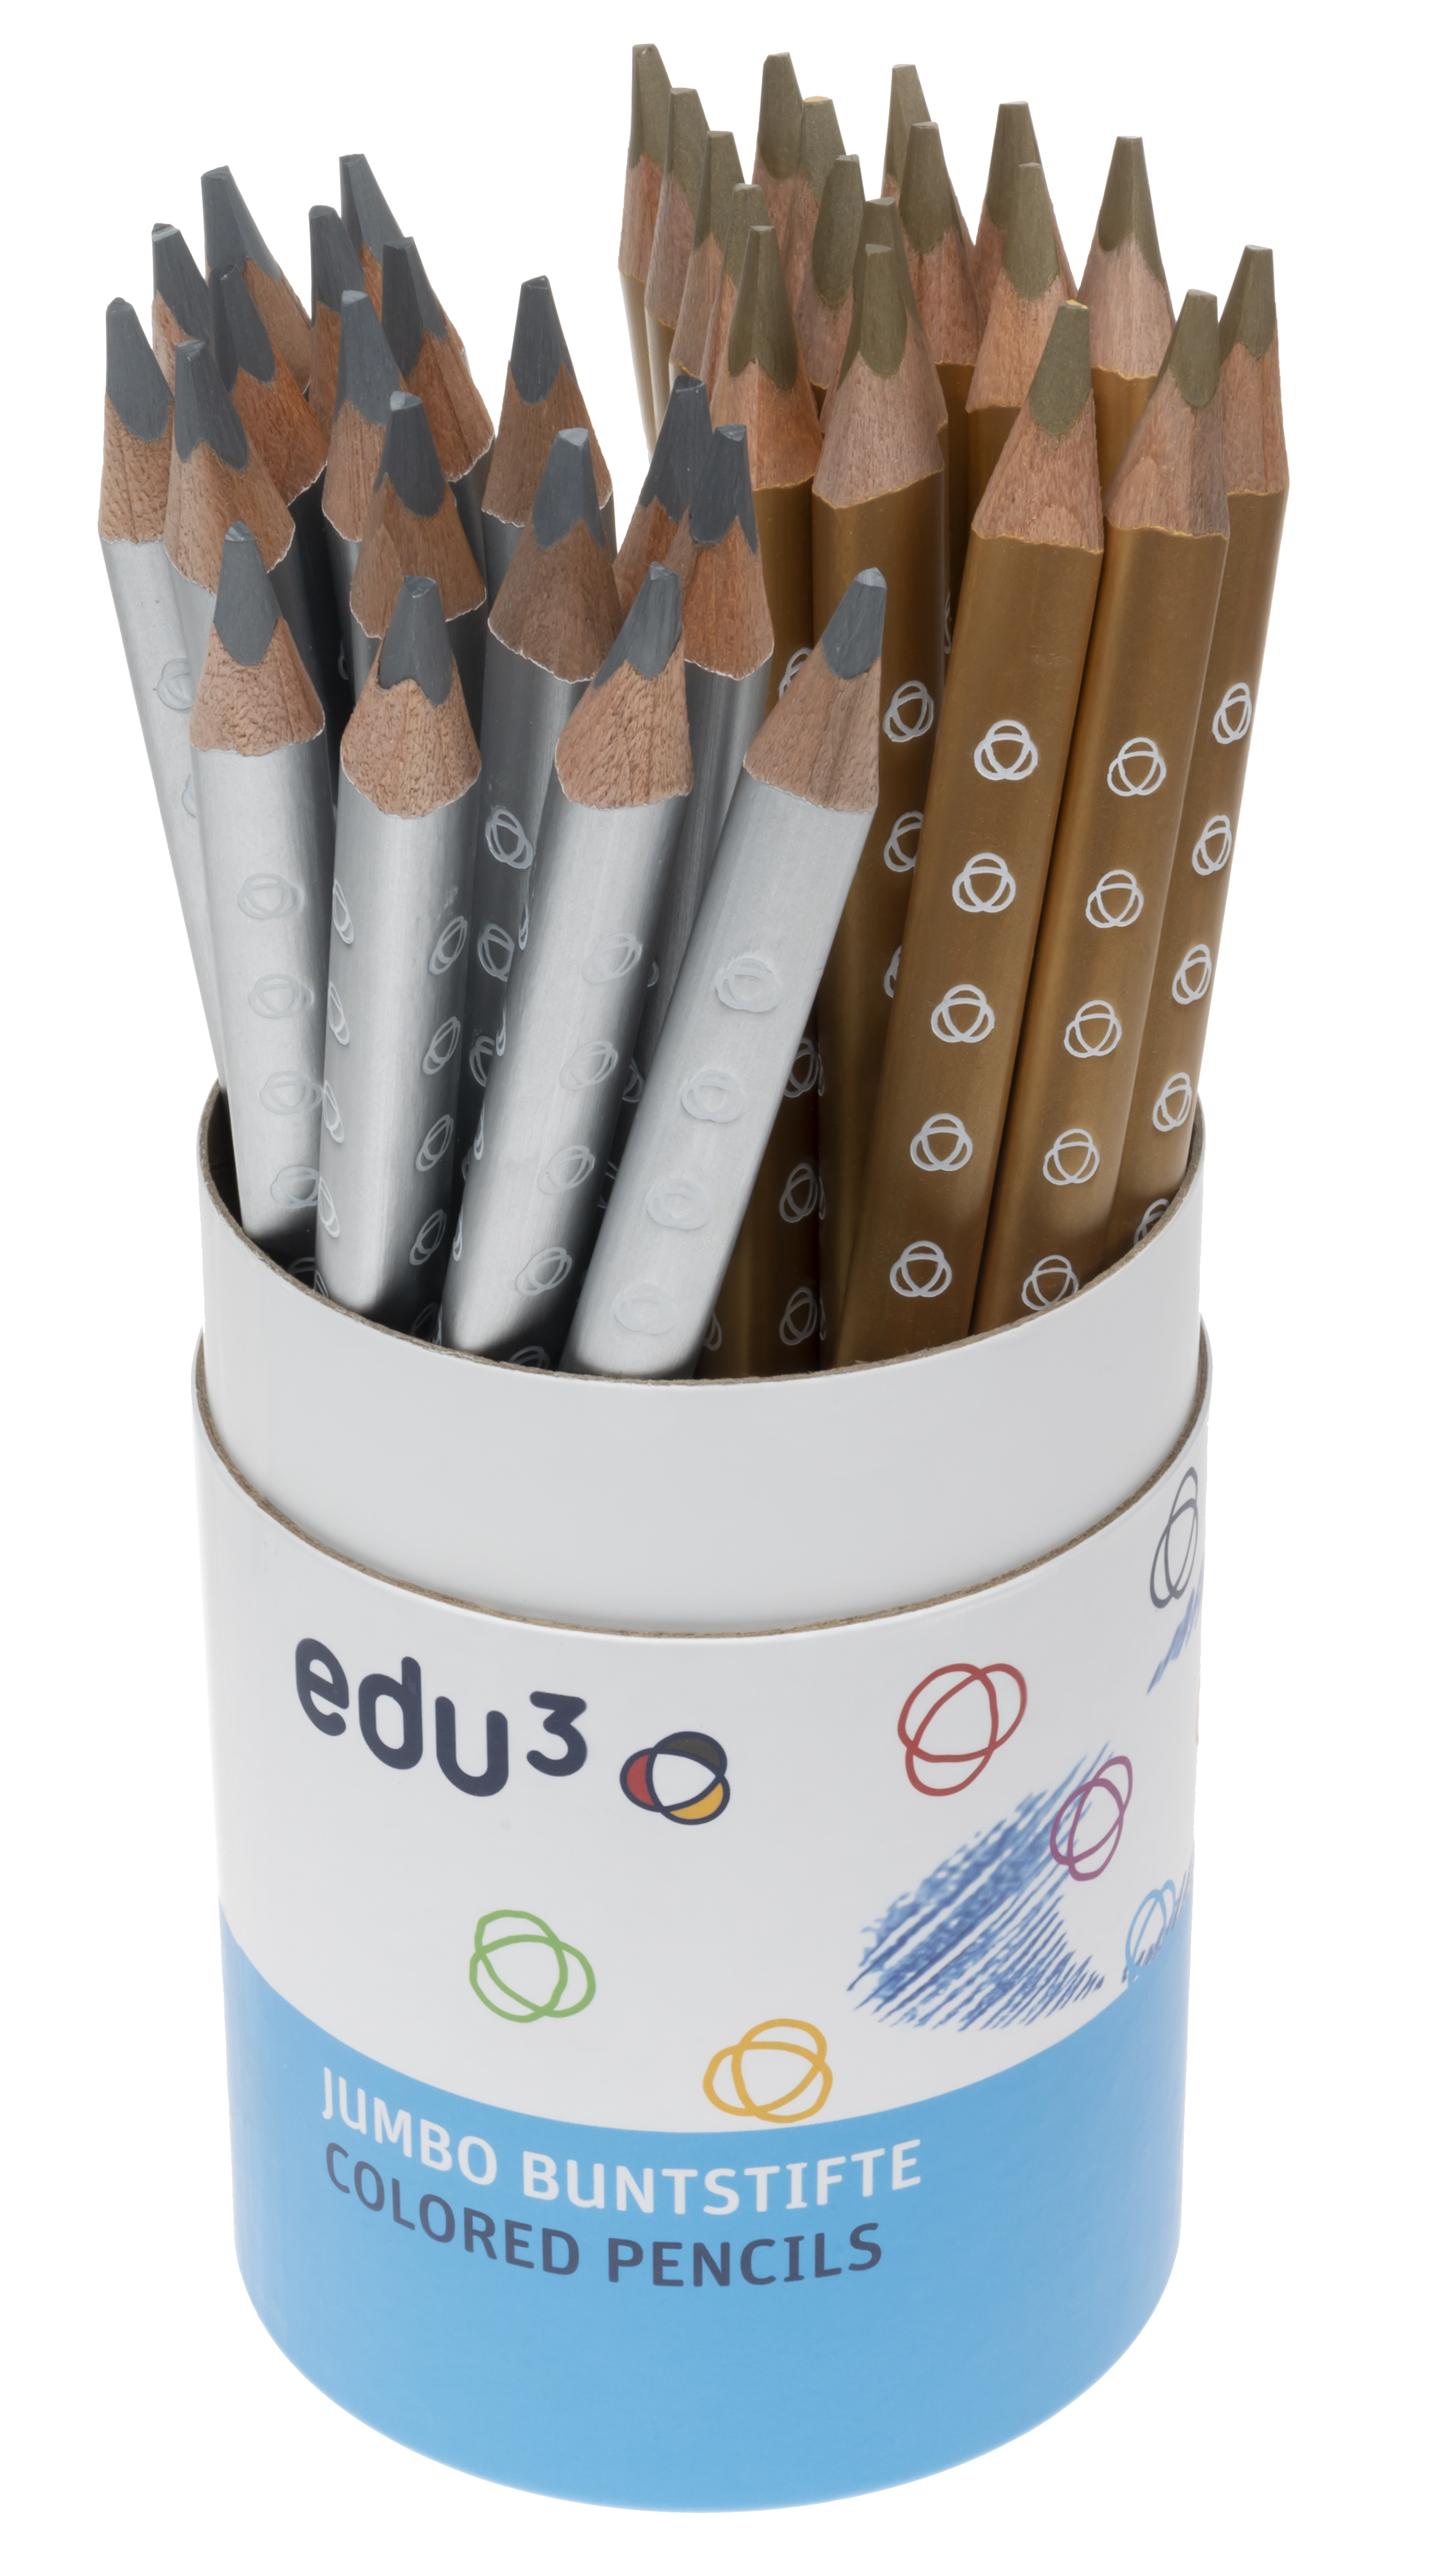 edu³ Jumbo colored pencil tri cup gold+silver